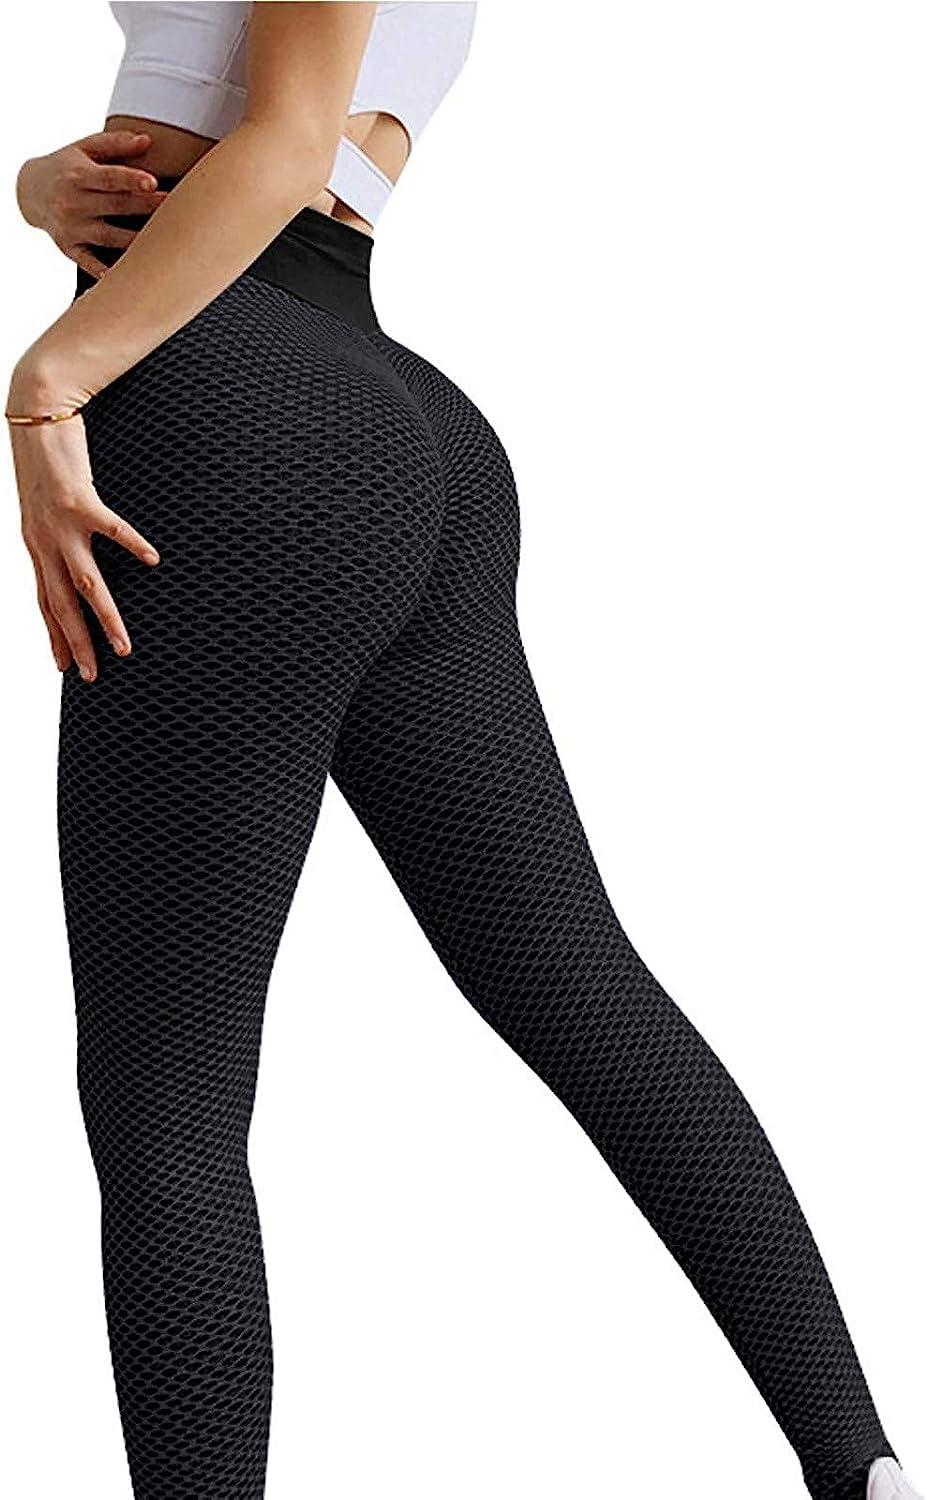 Yoga Pants Tall Length for Women Cotton Yoga Pants Men Stretch